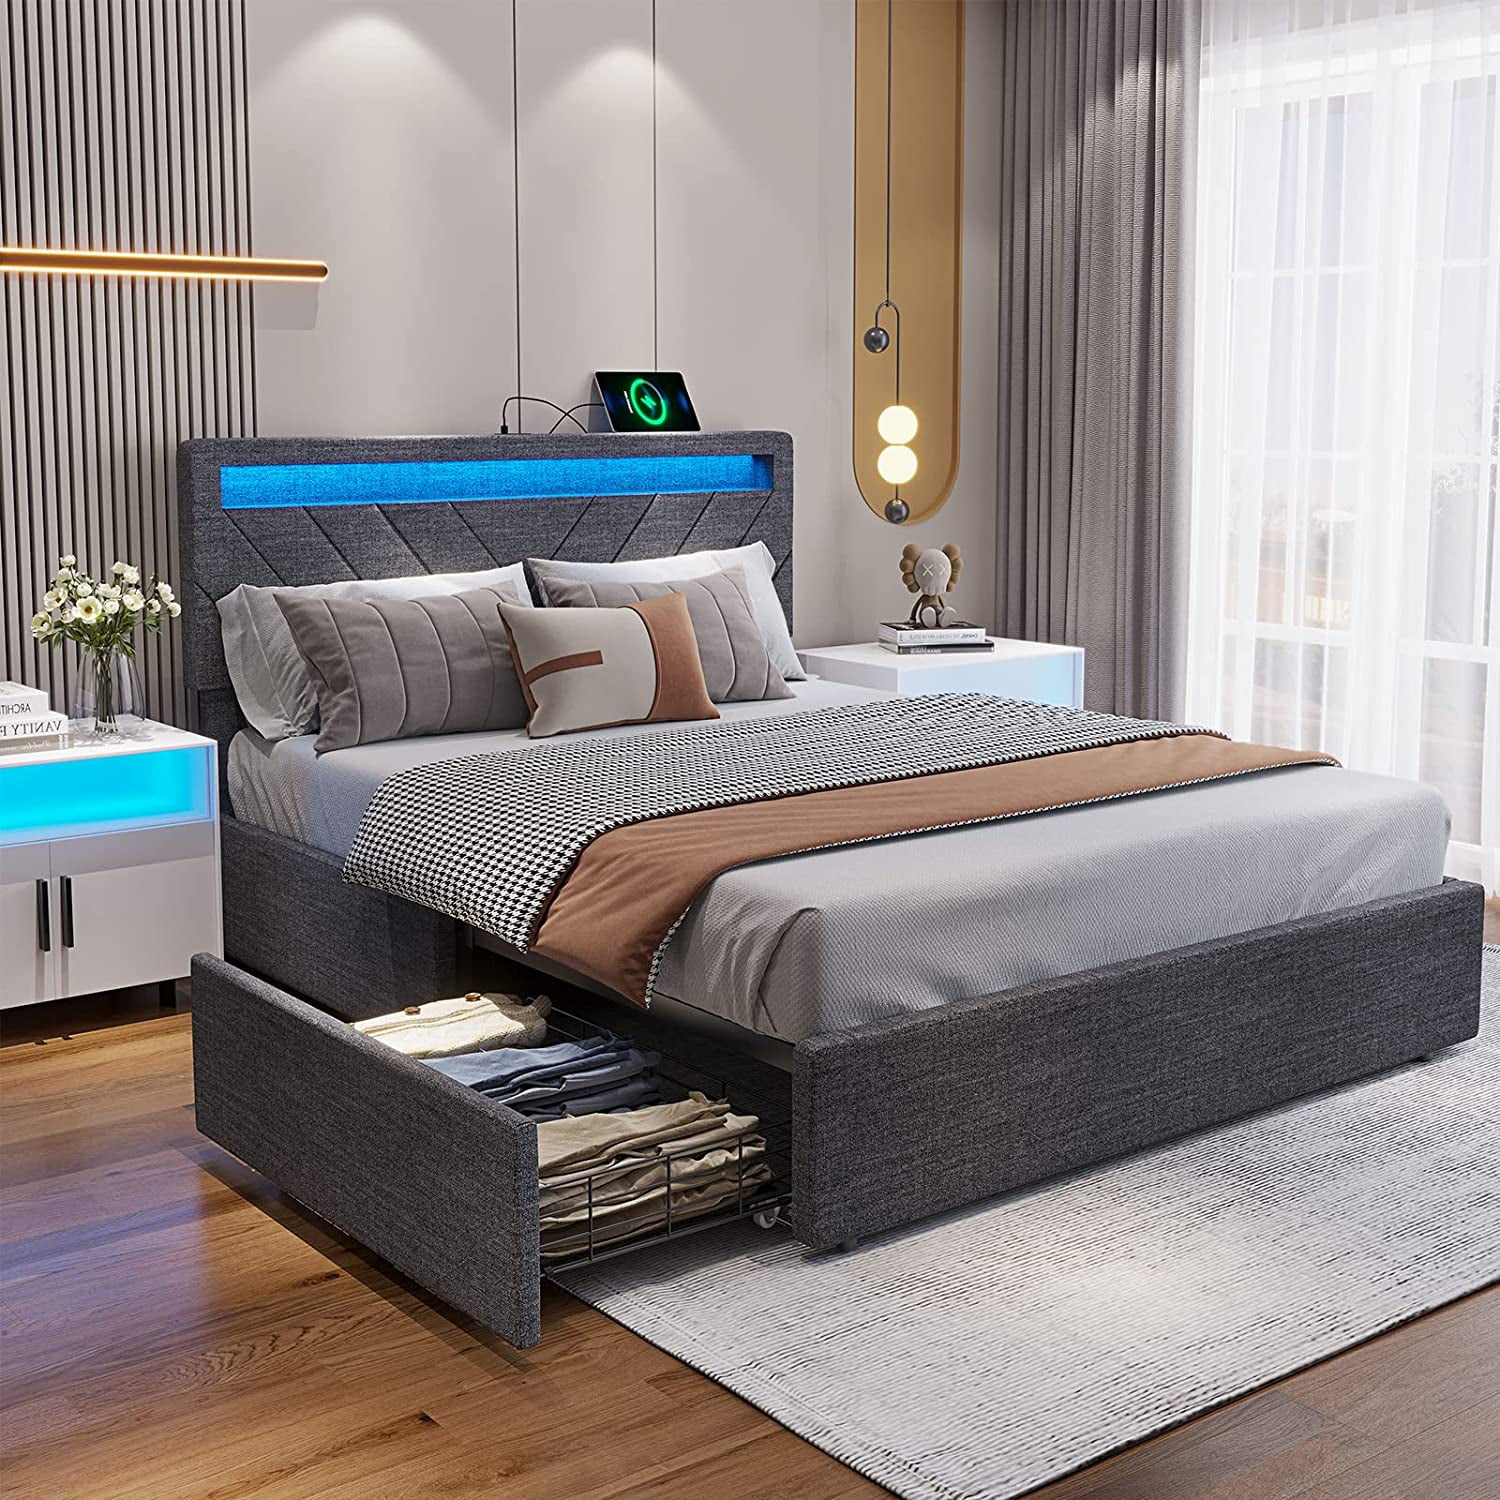 Adorneve Full Bed With Led Lights Platform Bed Frame With 4 Drawers